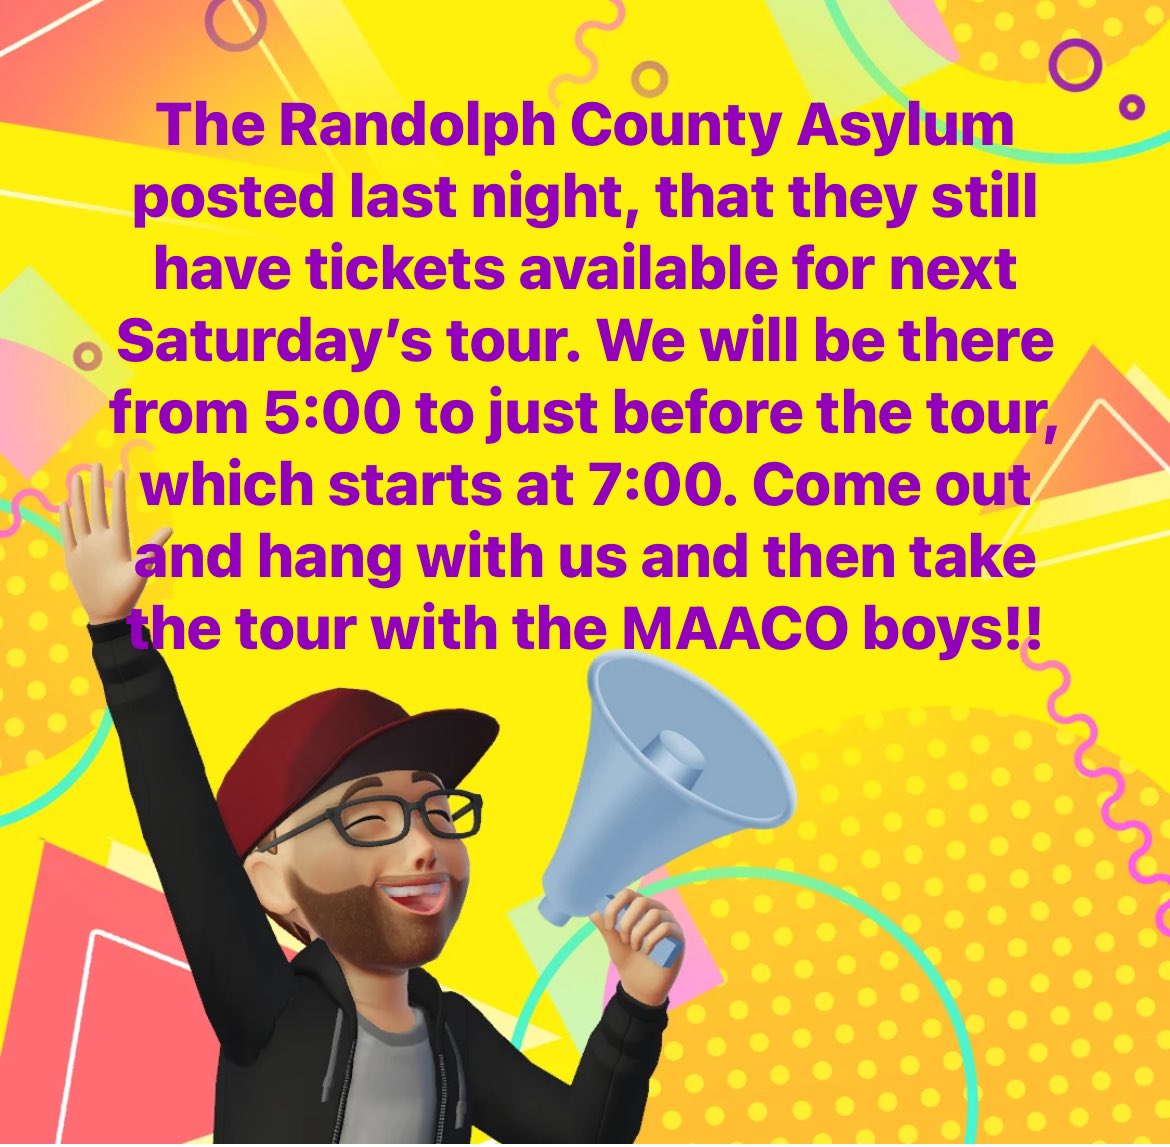 #RandolphCountyAsylum #paranormalinvestigation #MAACO #creepies #meetandgreet #gogetyasome